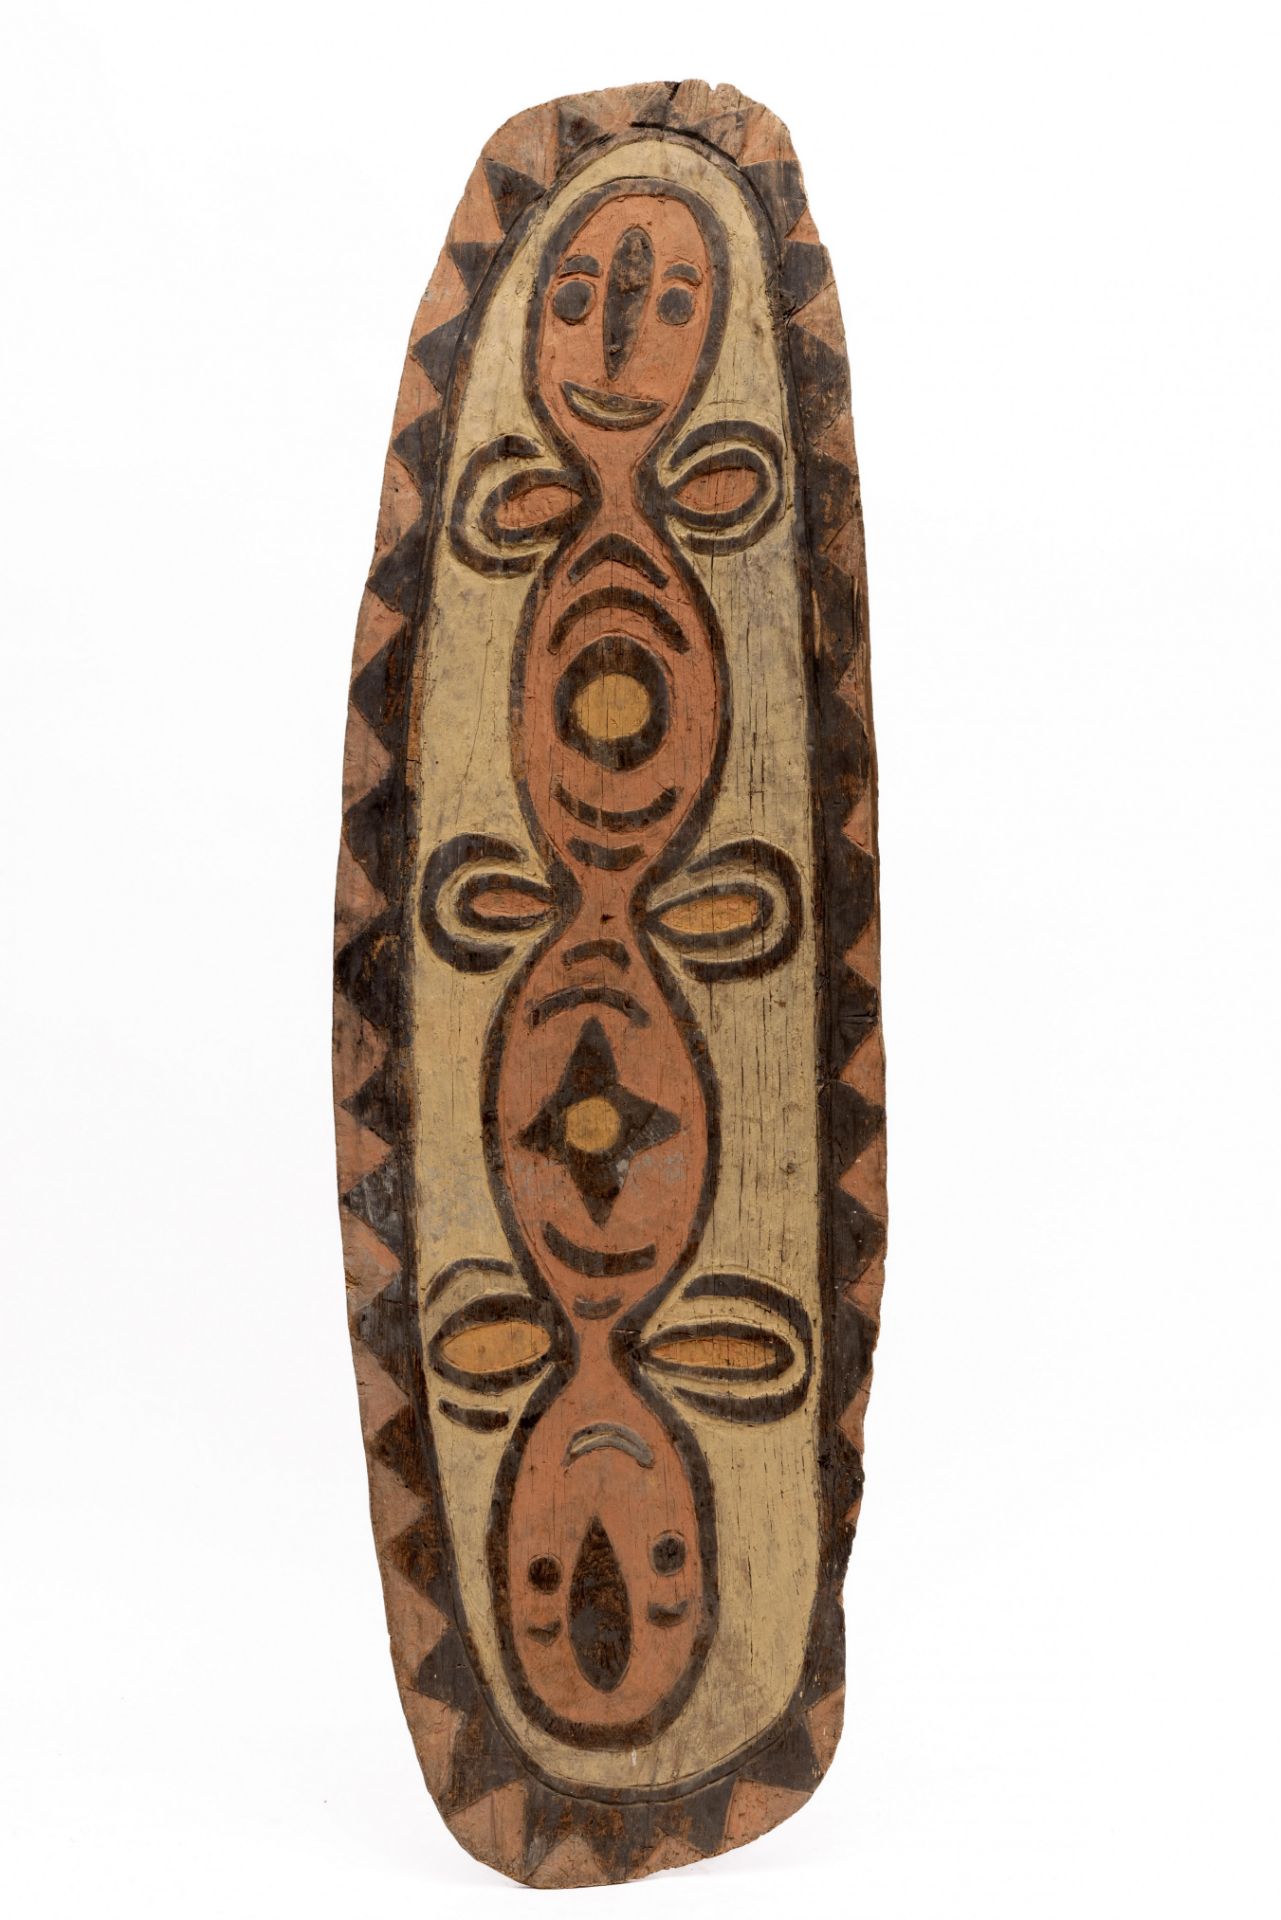 P.N. Guinea, Upper Sepik, a carved wooden panel